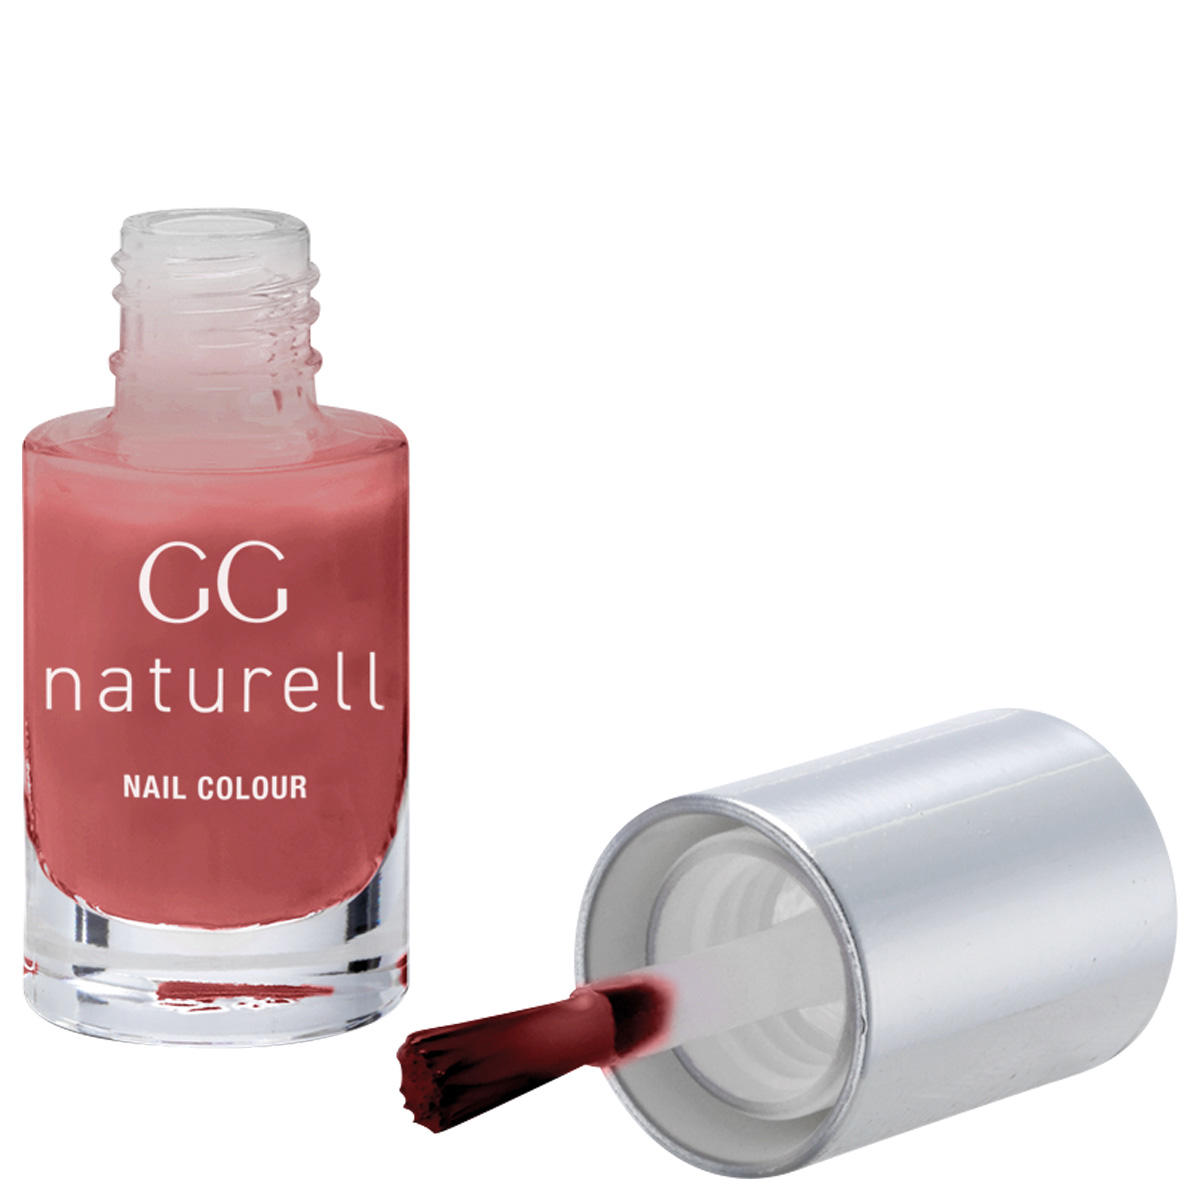 GERTRAUD GRUBER GG naturell Nail Colour 40 Mahagoni 5 ml